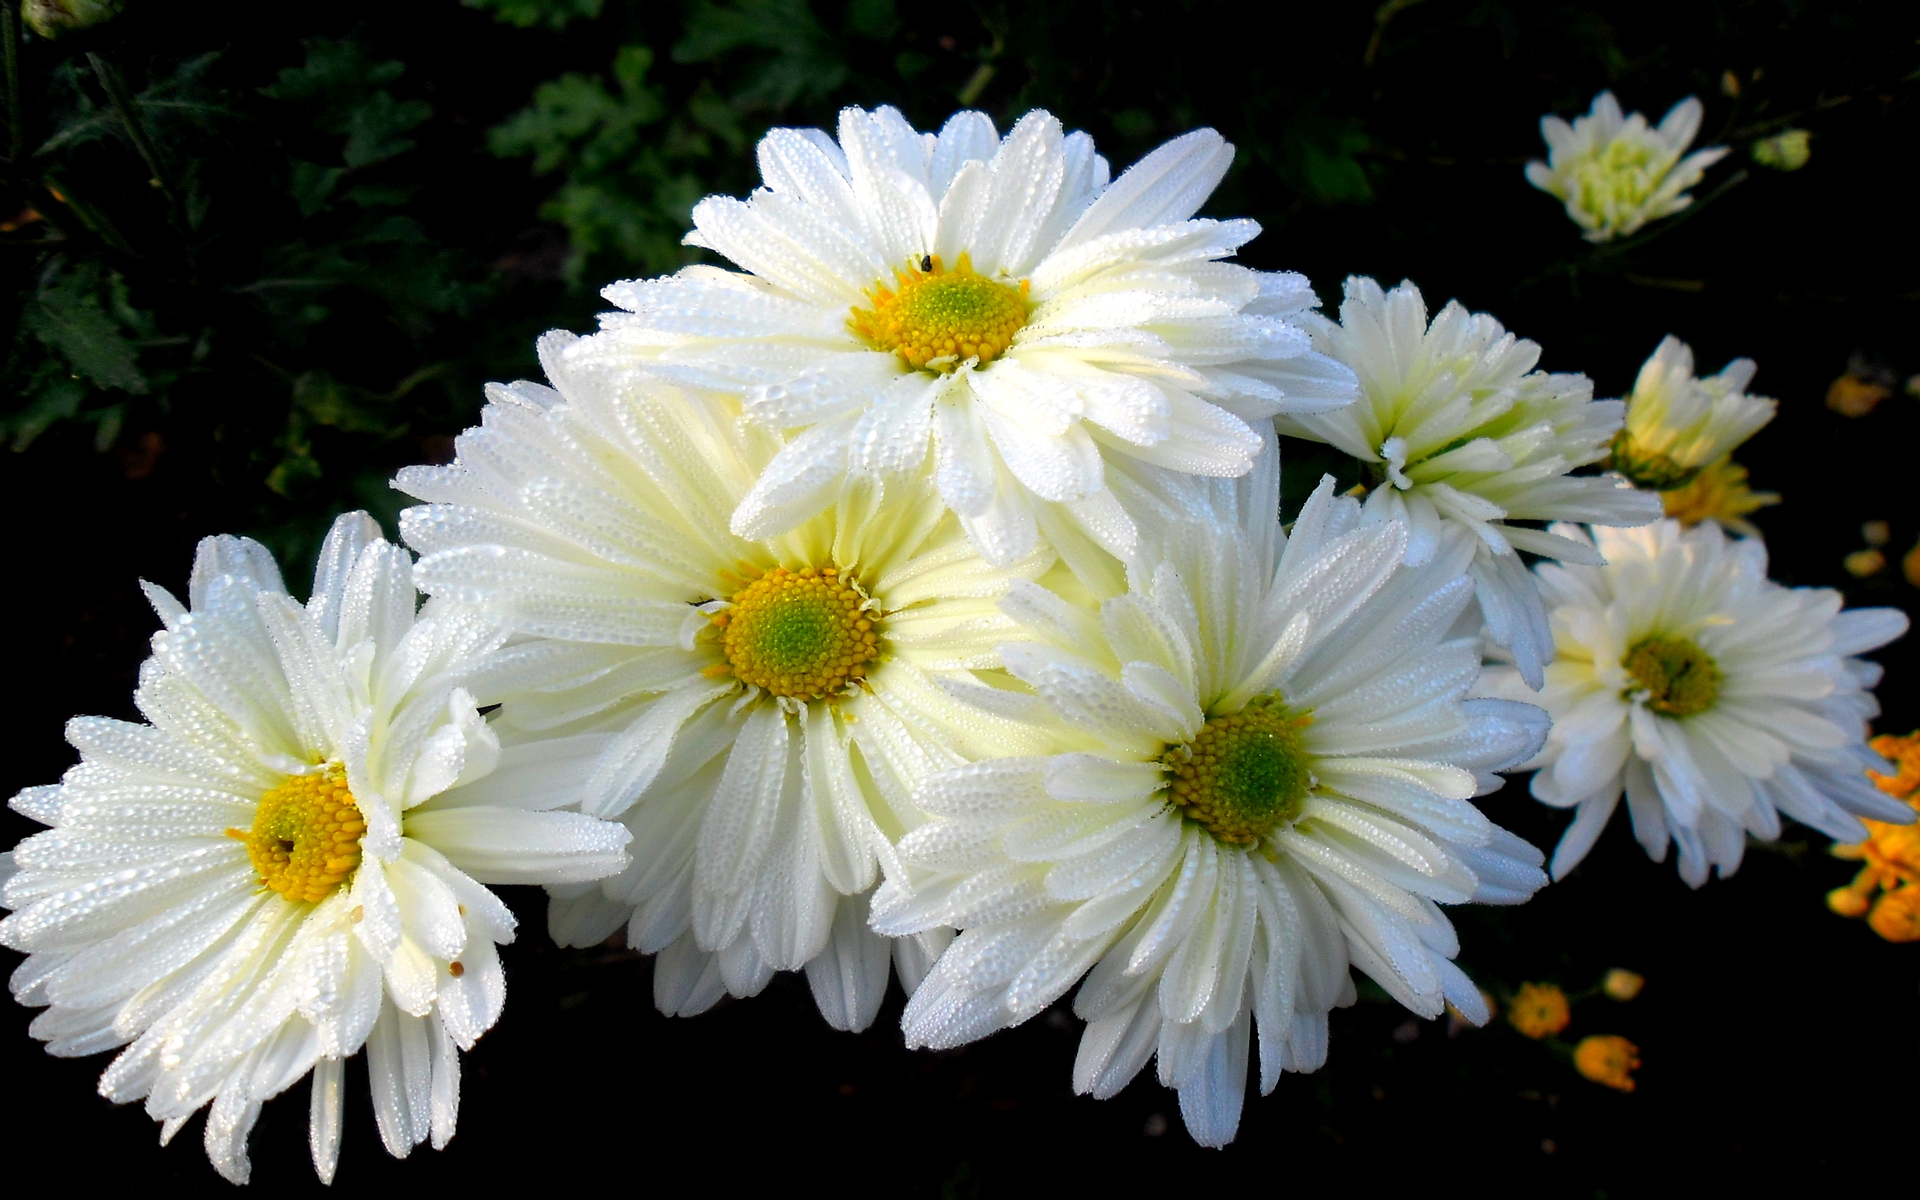 396745 descargar imagen tierra/naturaleza, crisantemo, flor, flor blanca, flores: fondos de pantalla y protectores de pantalla gratis